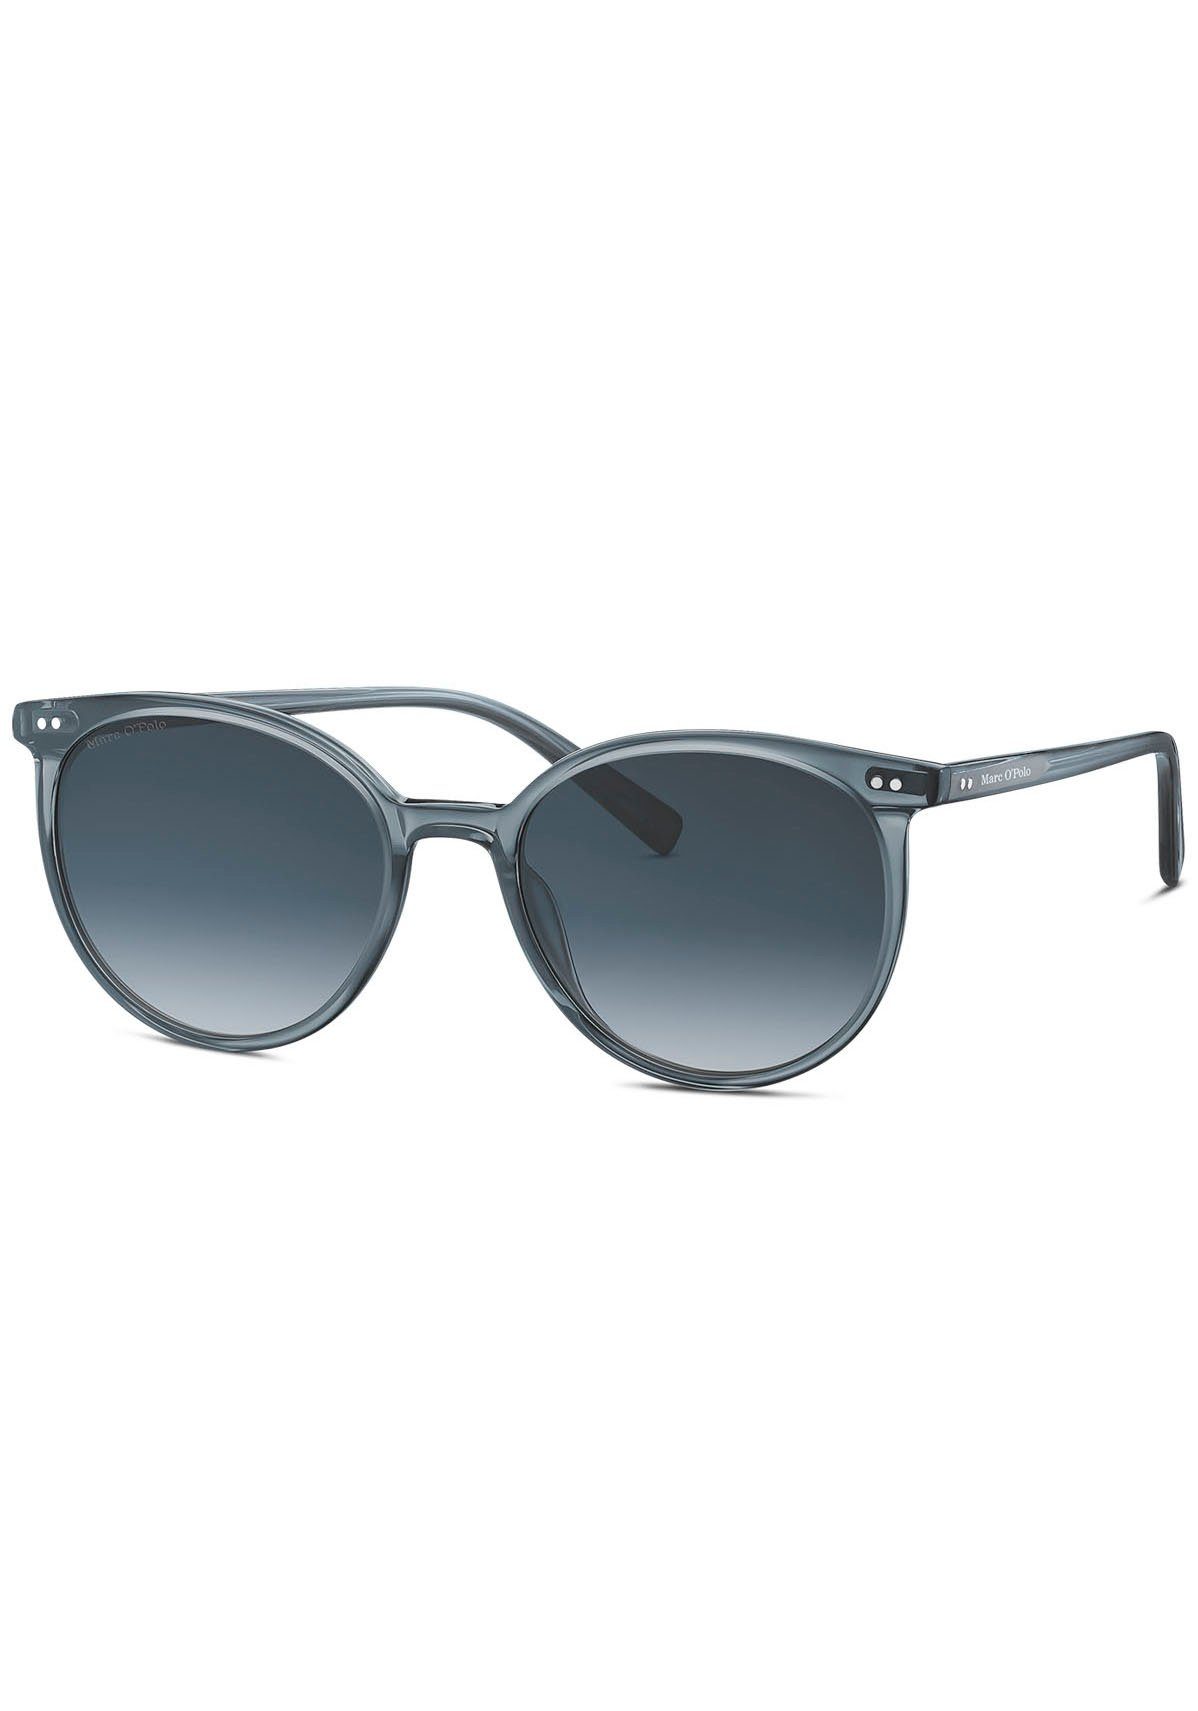 Marc O'Polo Sonnenbrille Modell 506164 Panto-Form grau | Sonnenbrillen